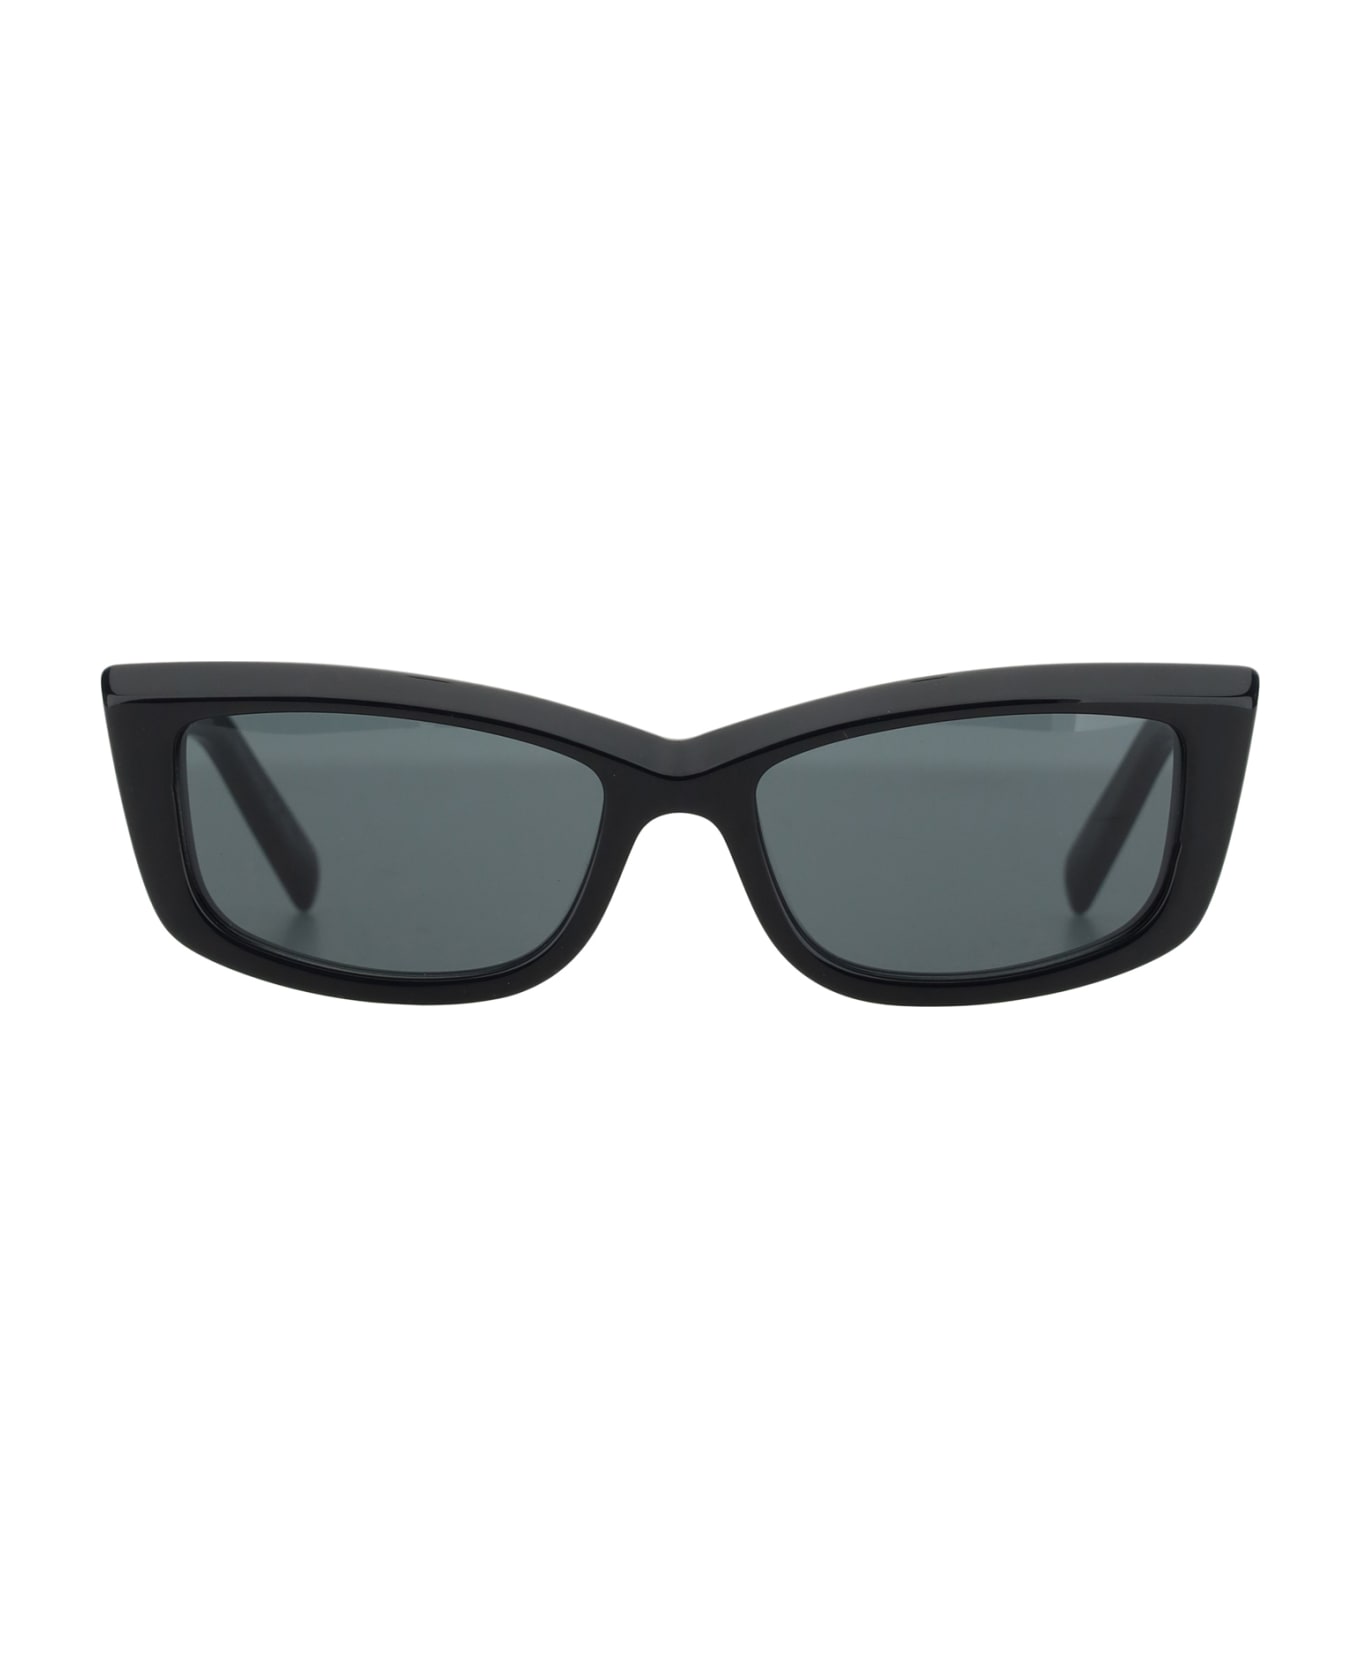 Saint Laurent Sunglasses 658 - Black Black Black